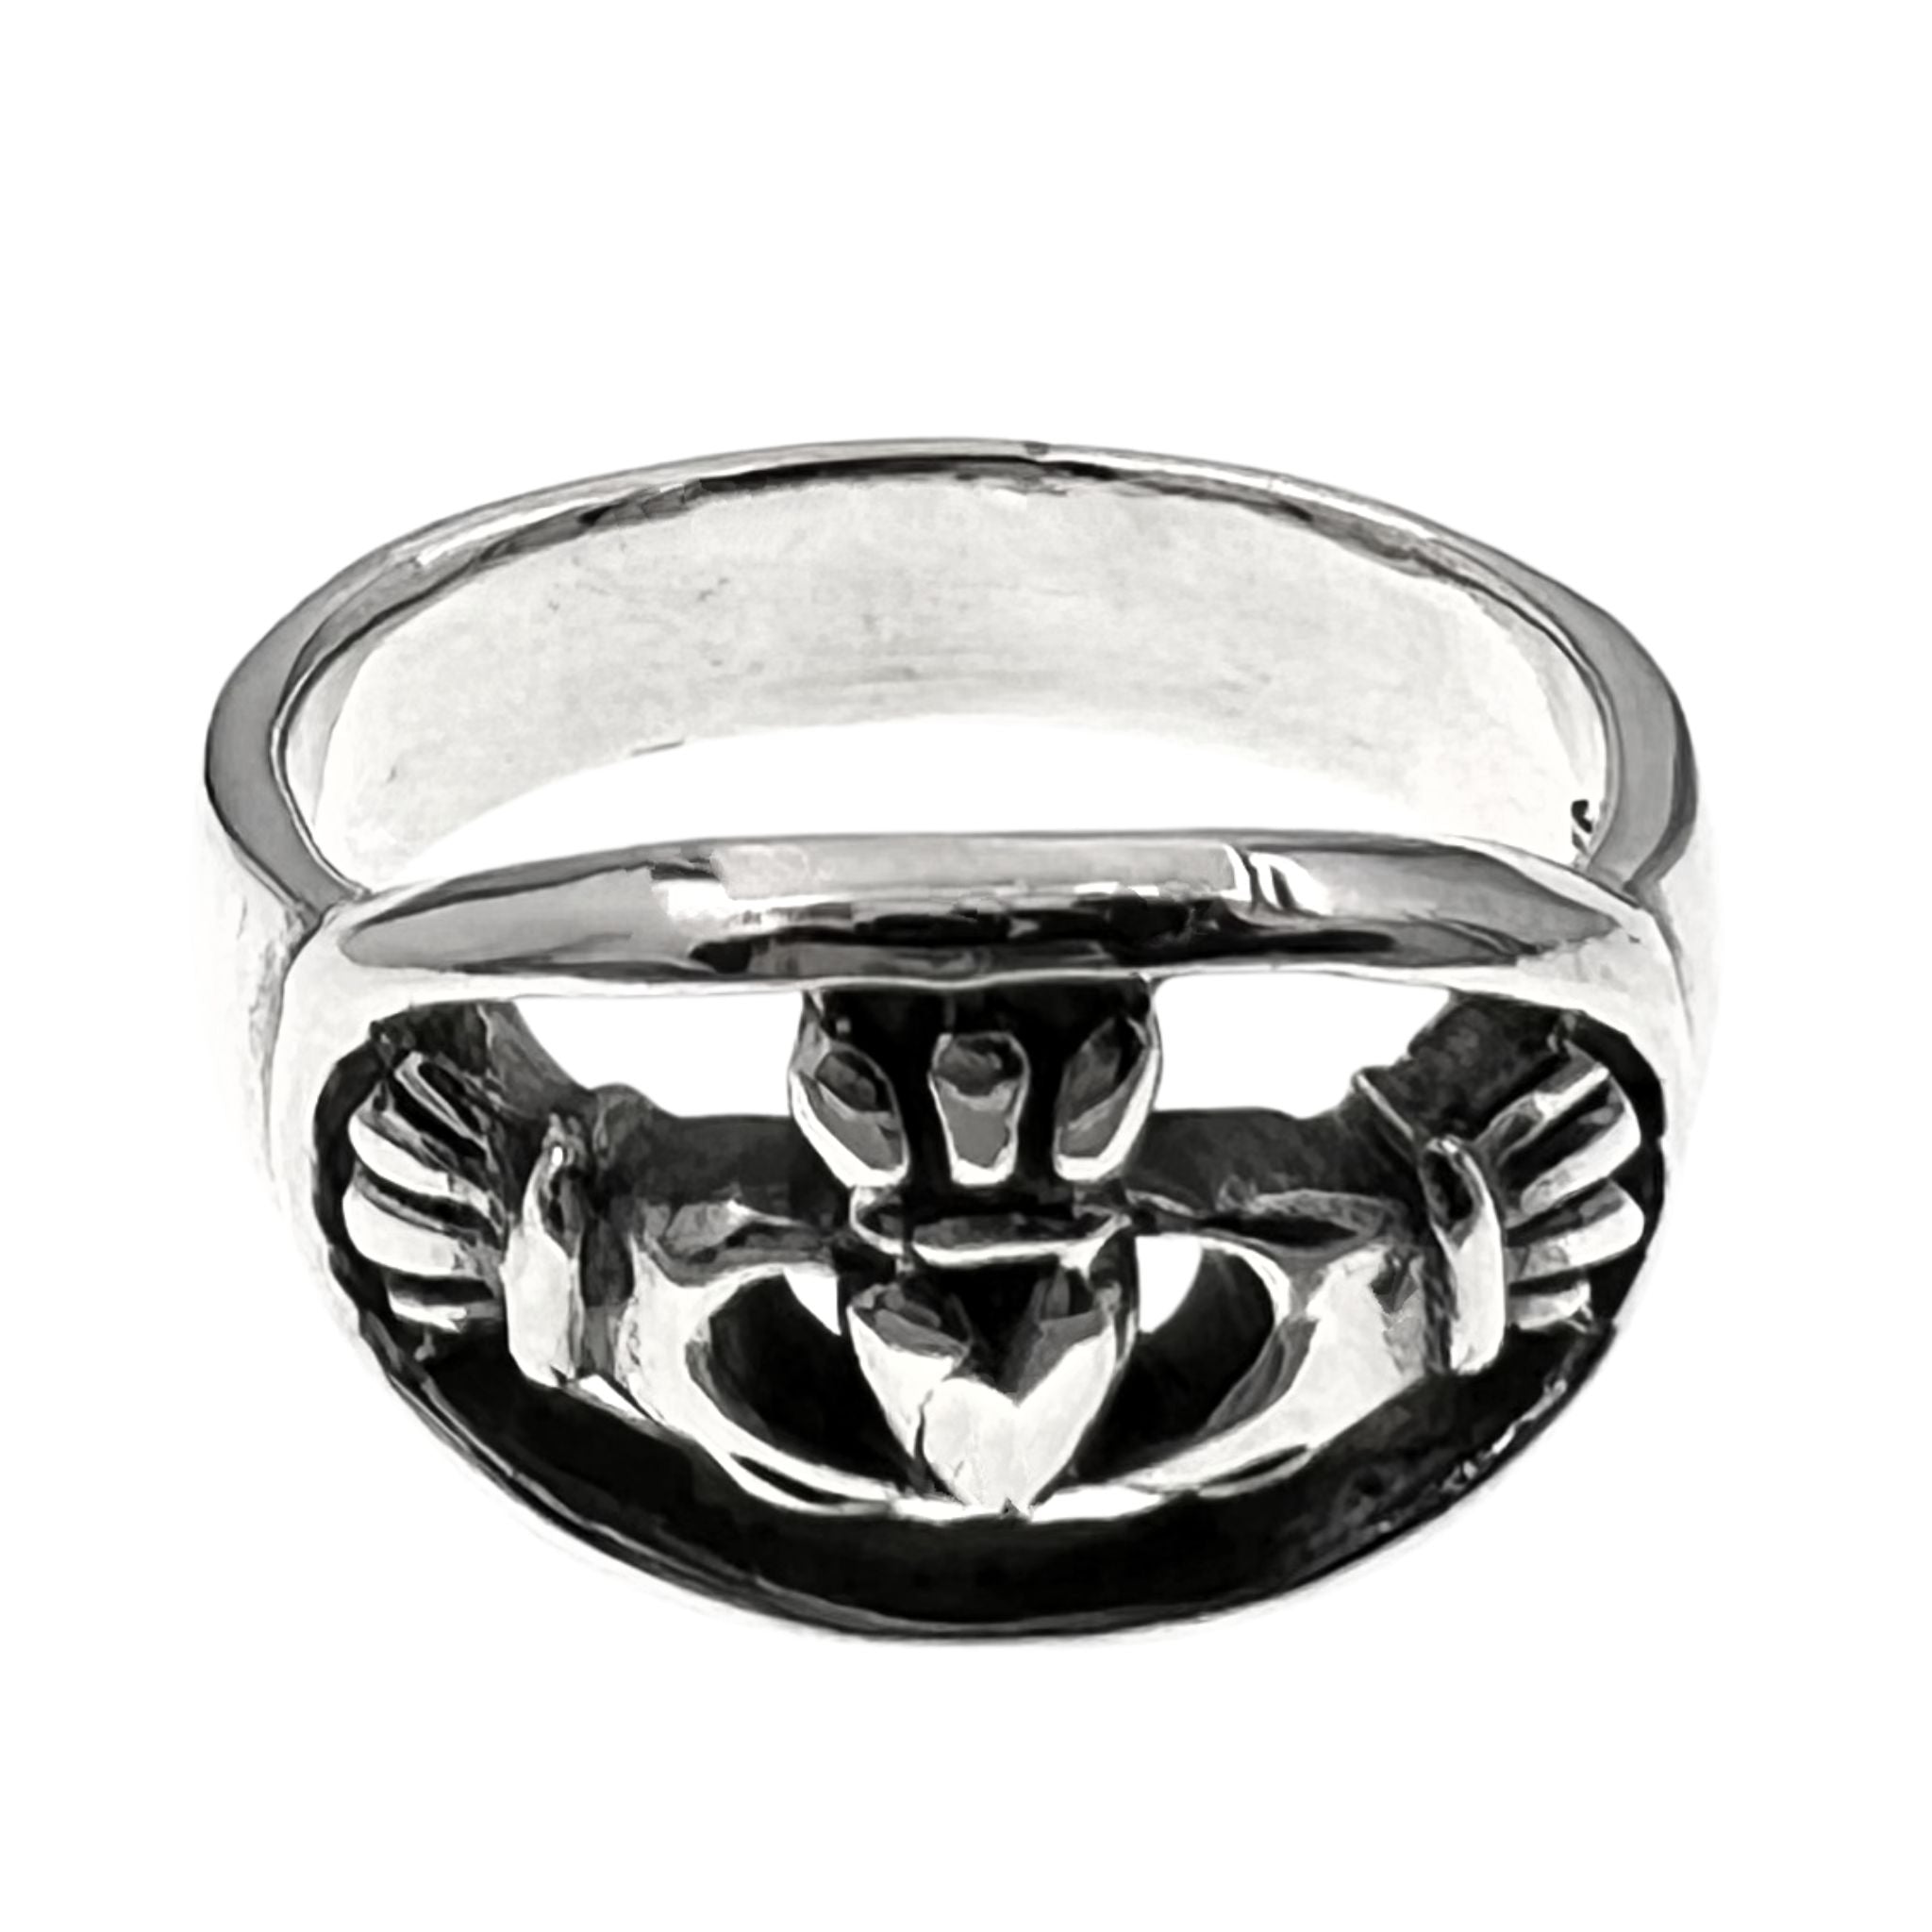 2.5Gm 925 Sterling Silver Infinity Design Zircon Silver Ring